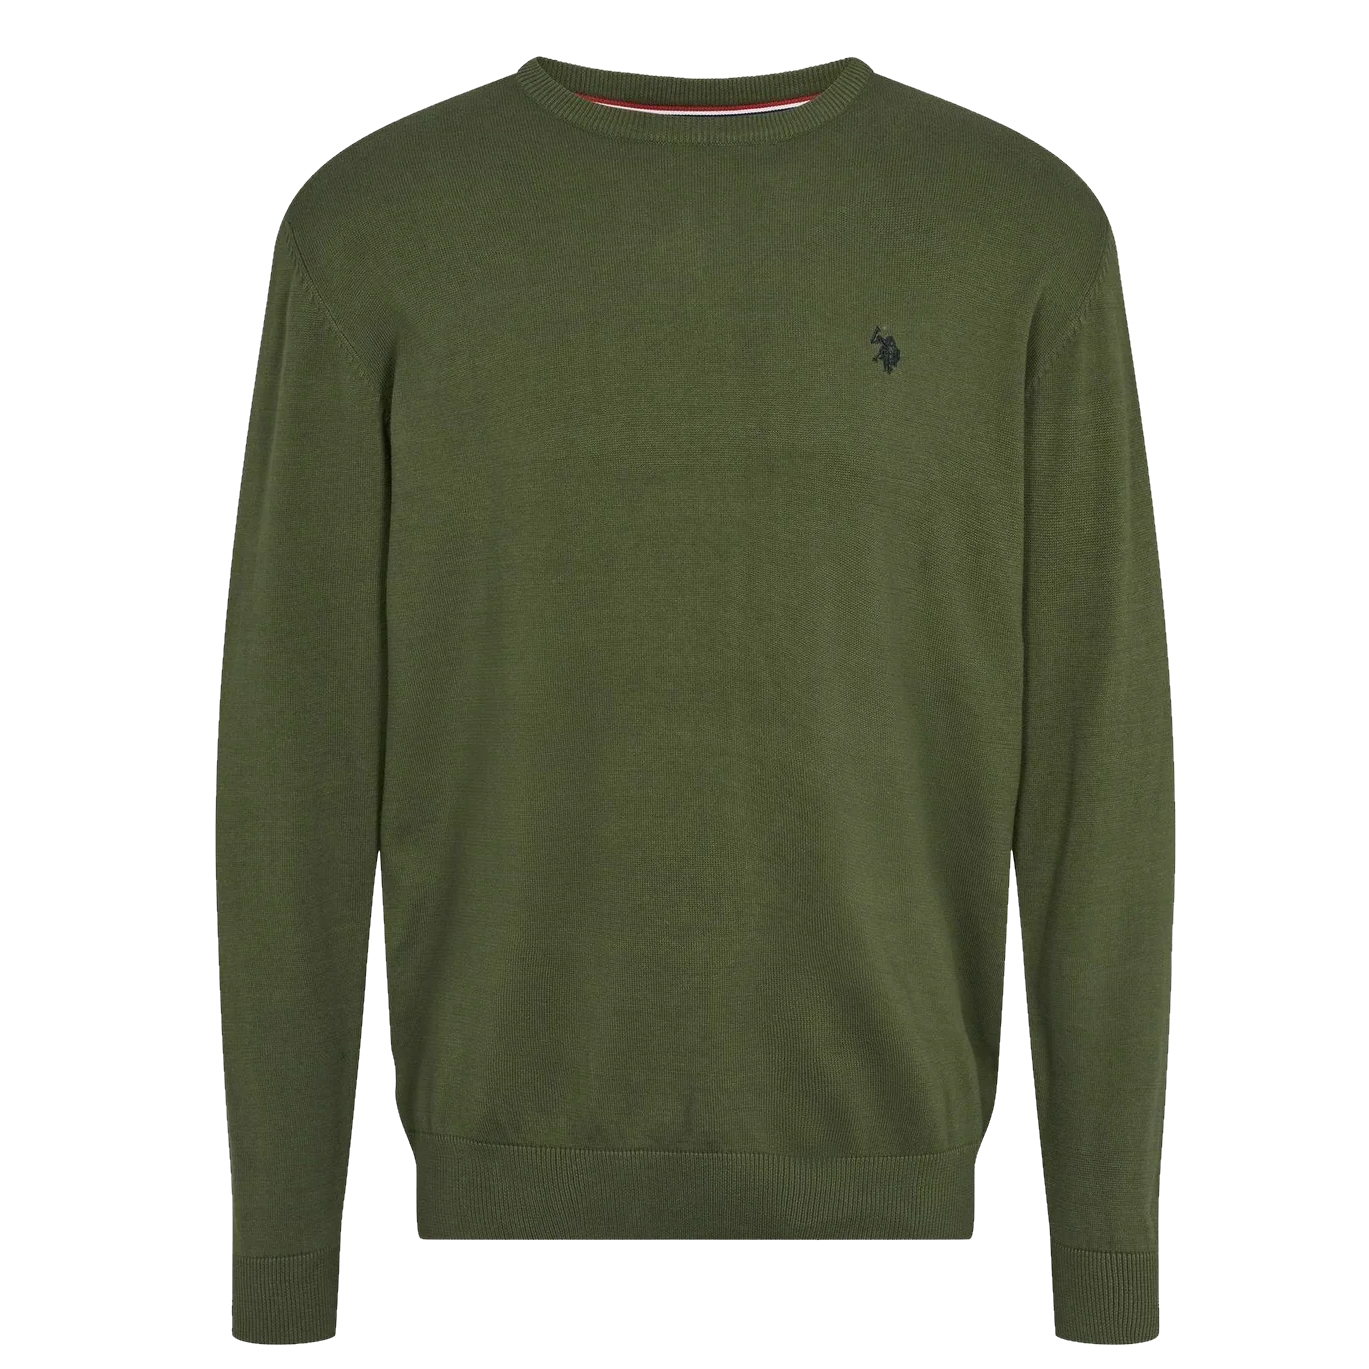 Se US Polo Adair Sweater, strik grøn - XL hos Fashionhero.dk